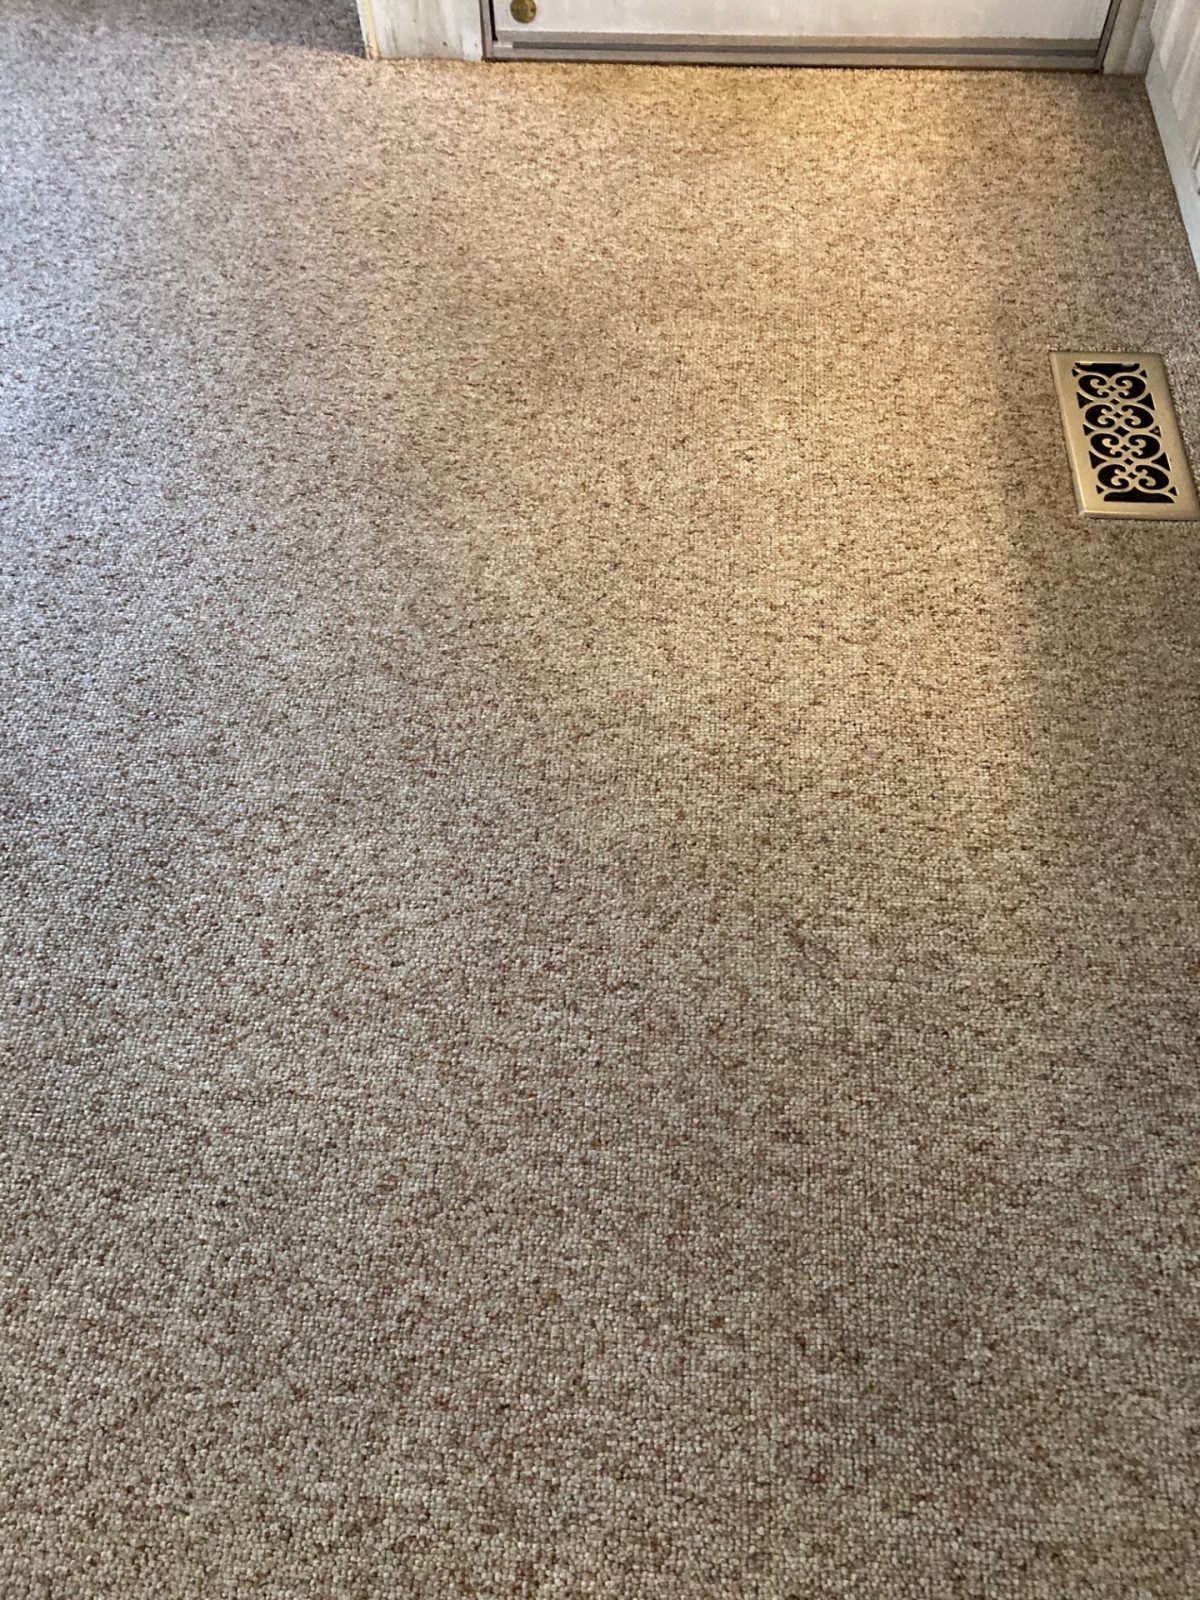 carpet cleaning fort wayne